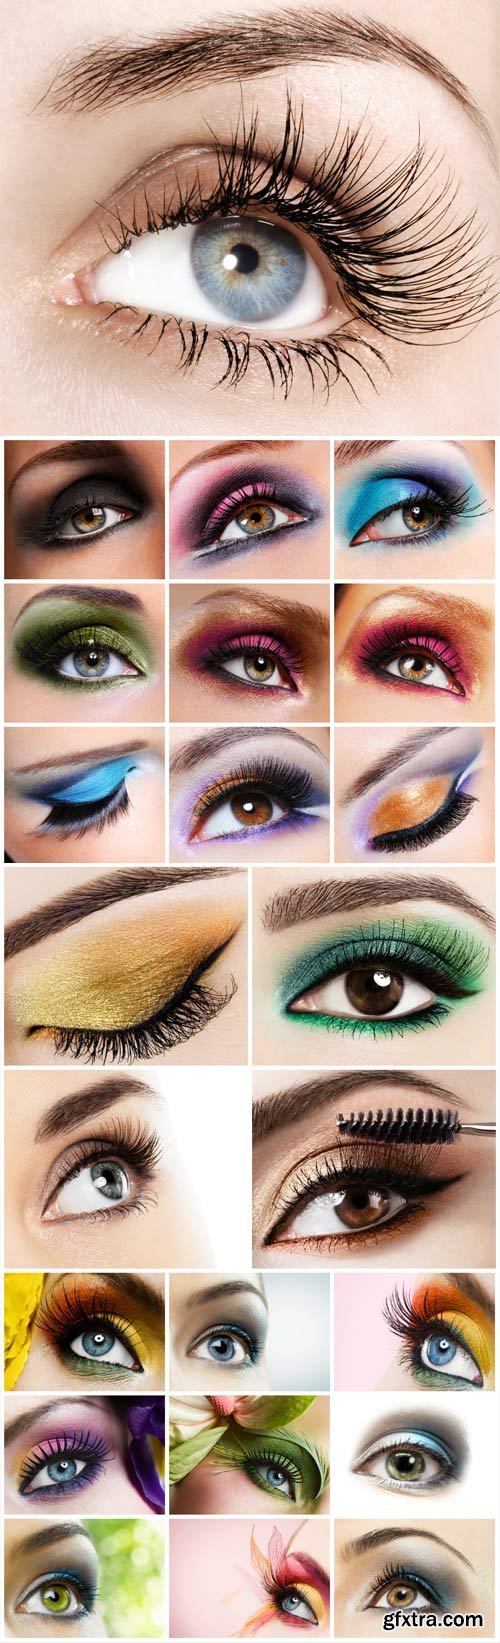 Eyes and eye makeup stock photo